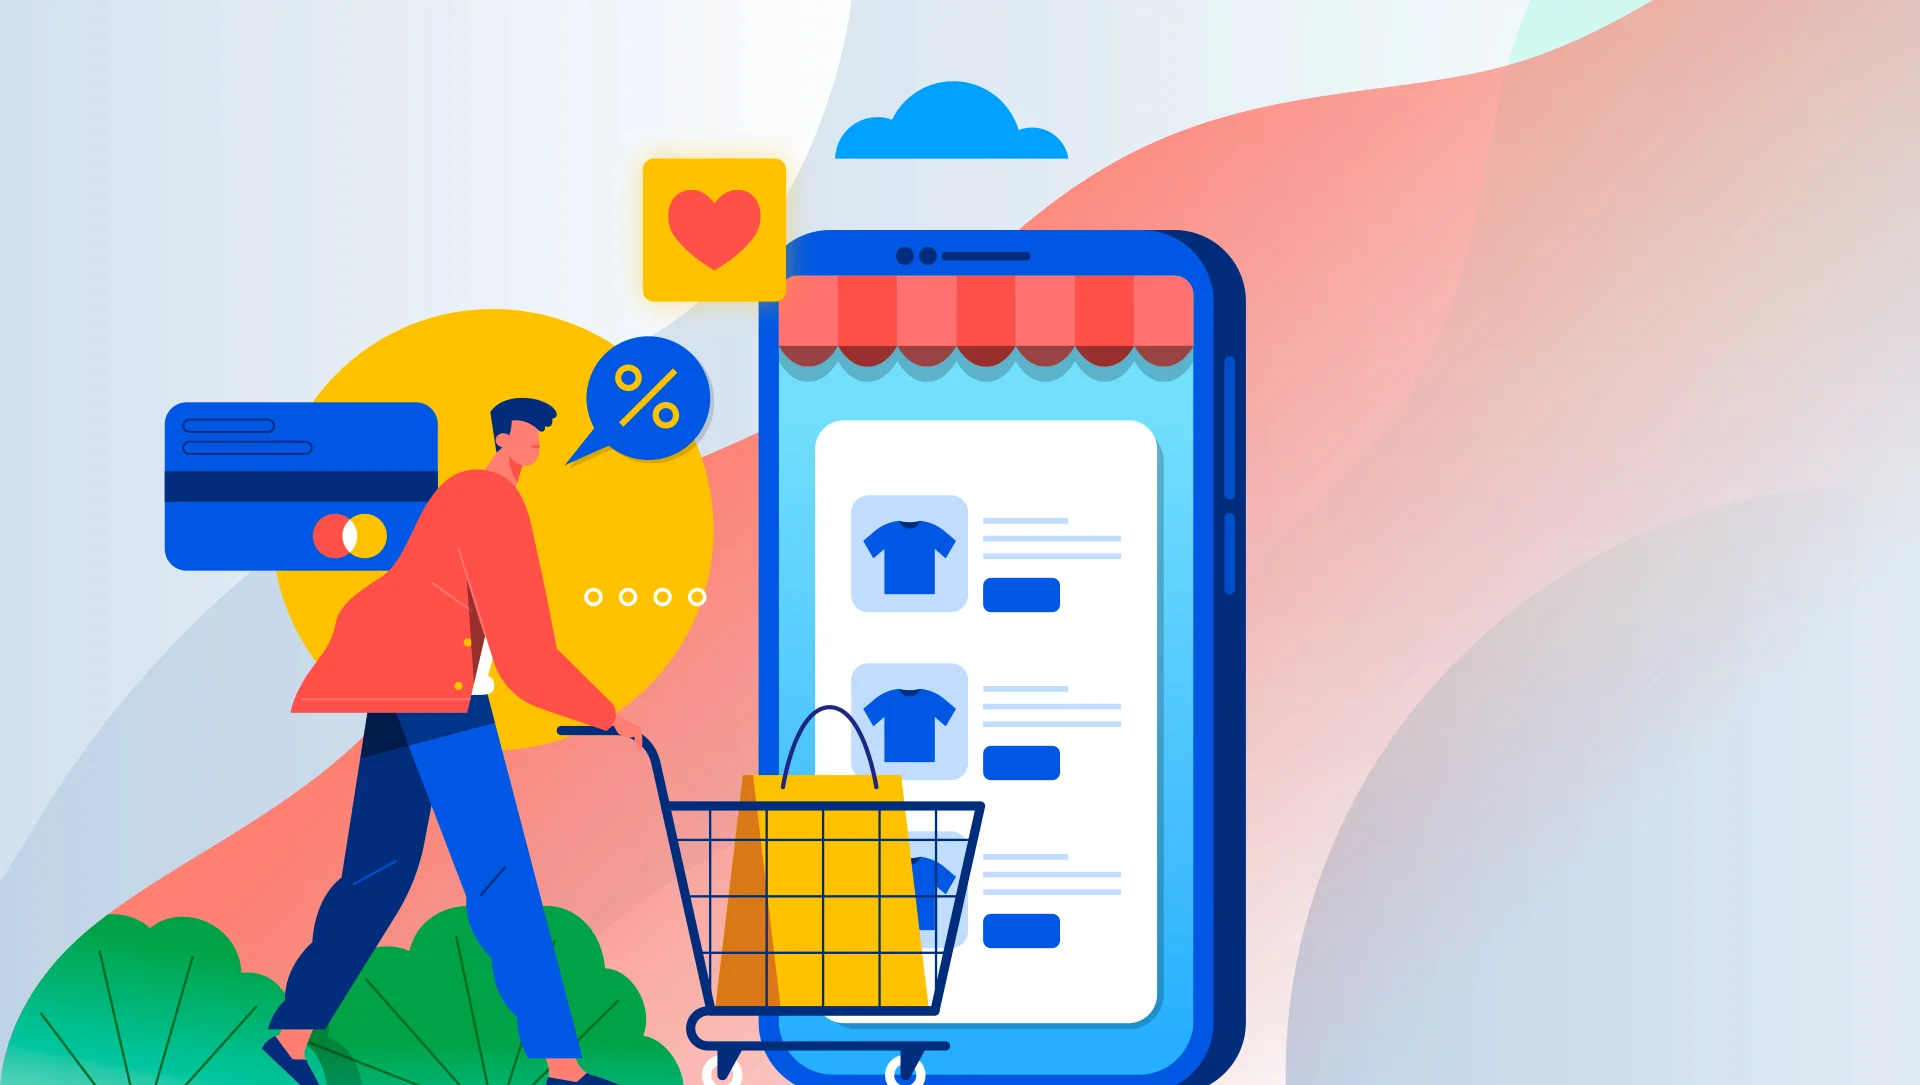 e-commerce-mobile-app-v-s-website-category-page-image